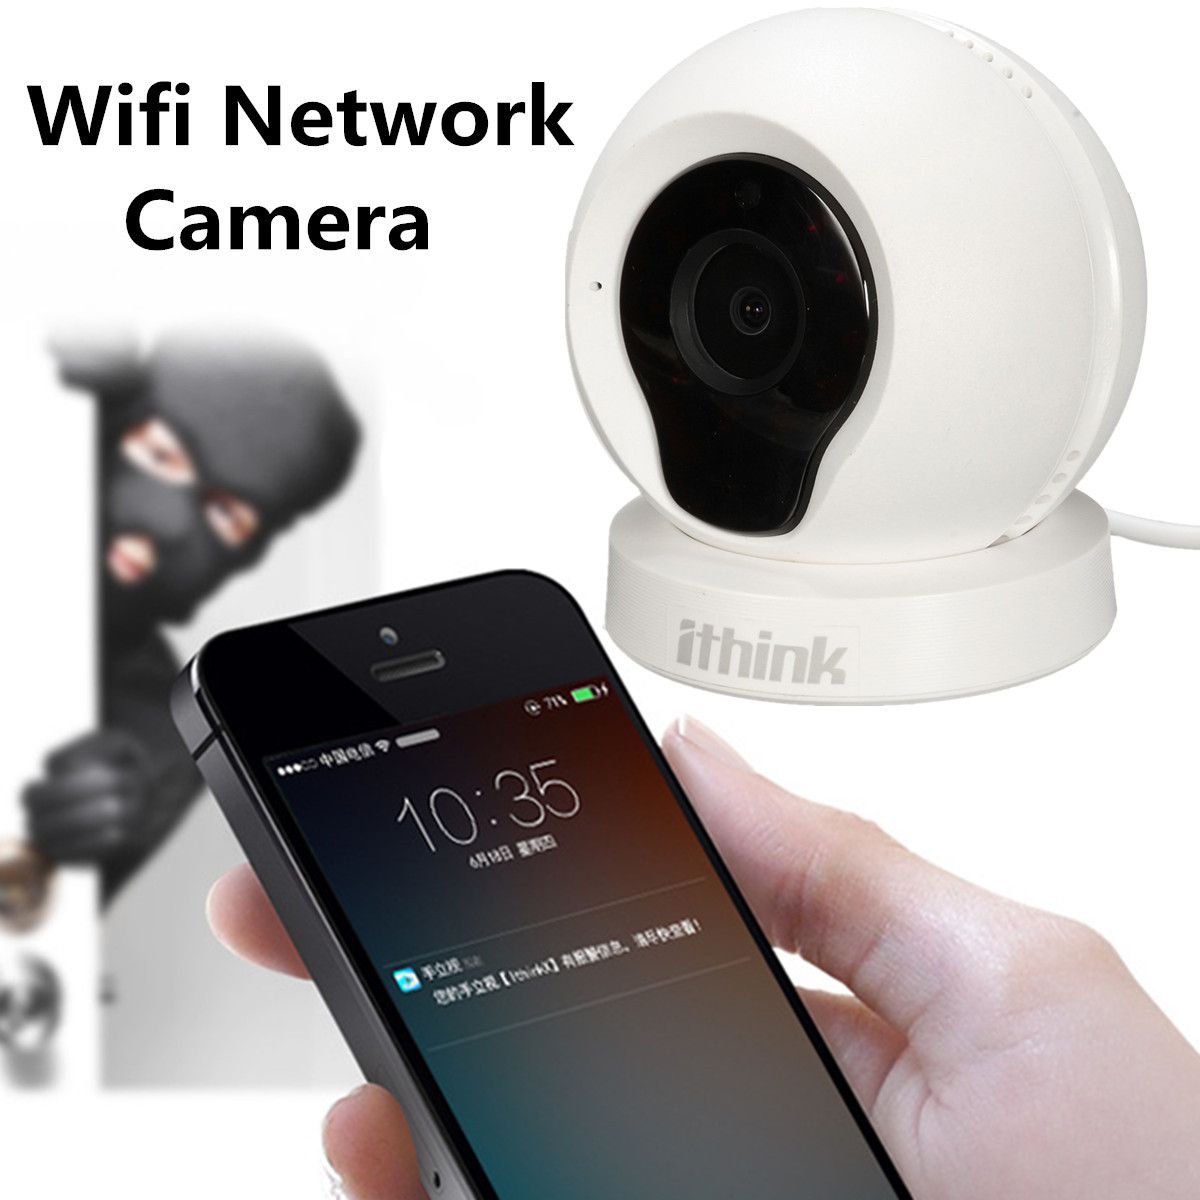 Q2-HD-720P-Wireless-Network-Wifi-Security-IR-IP-Camera-Baby-Monitor-Night-Vision-1124893